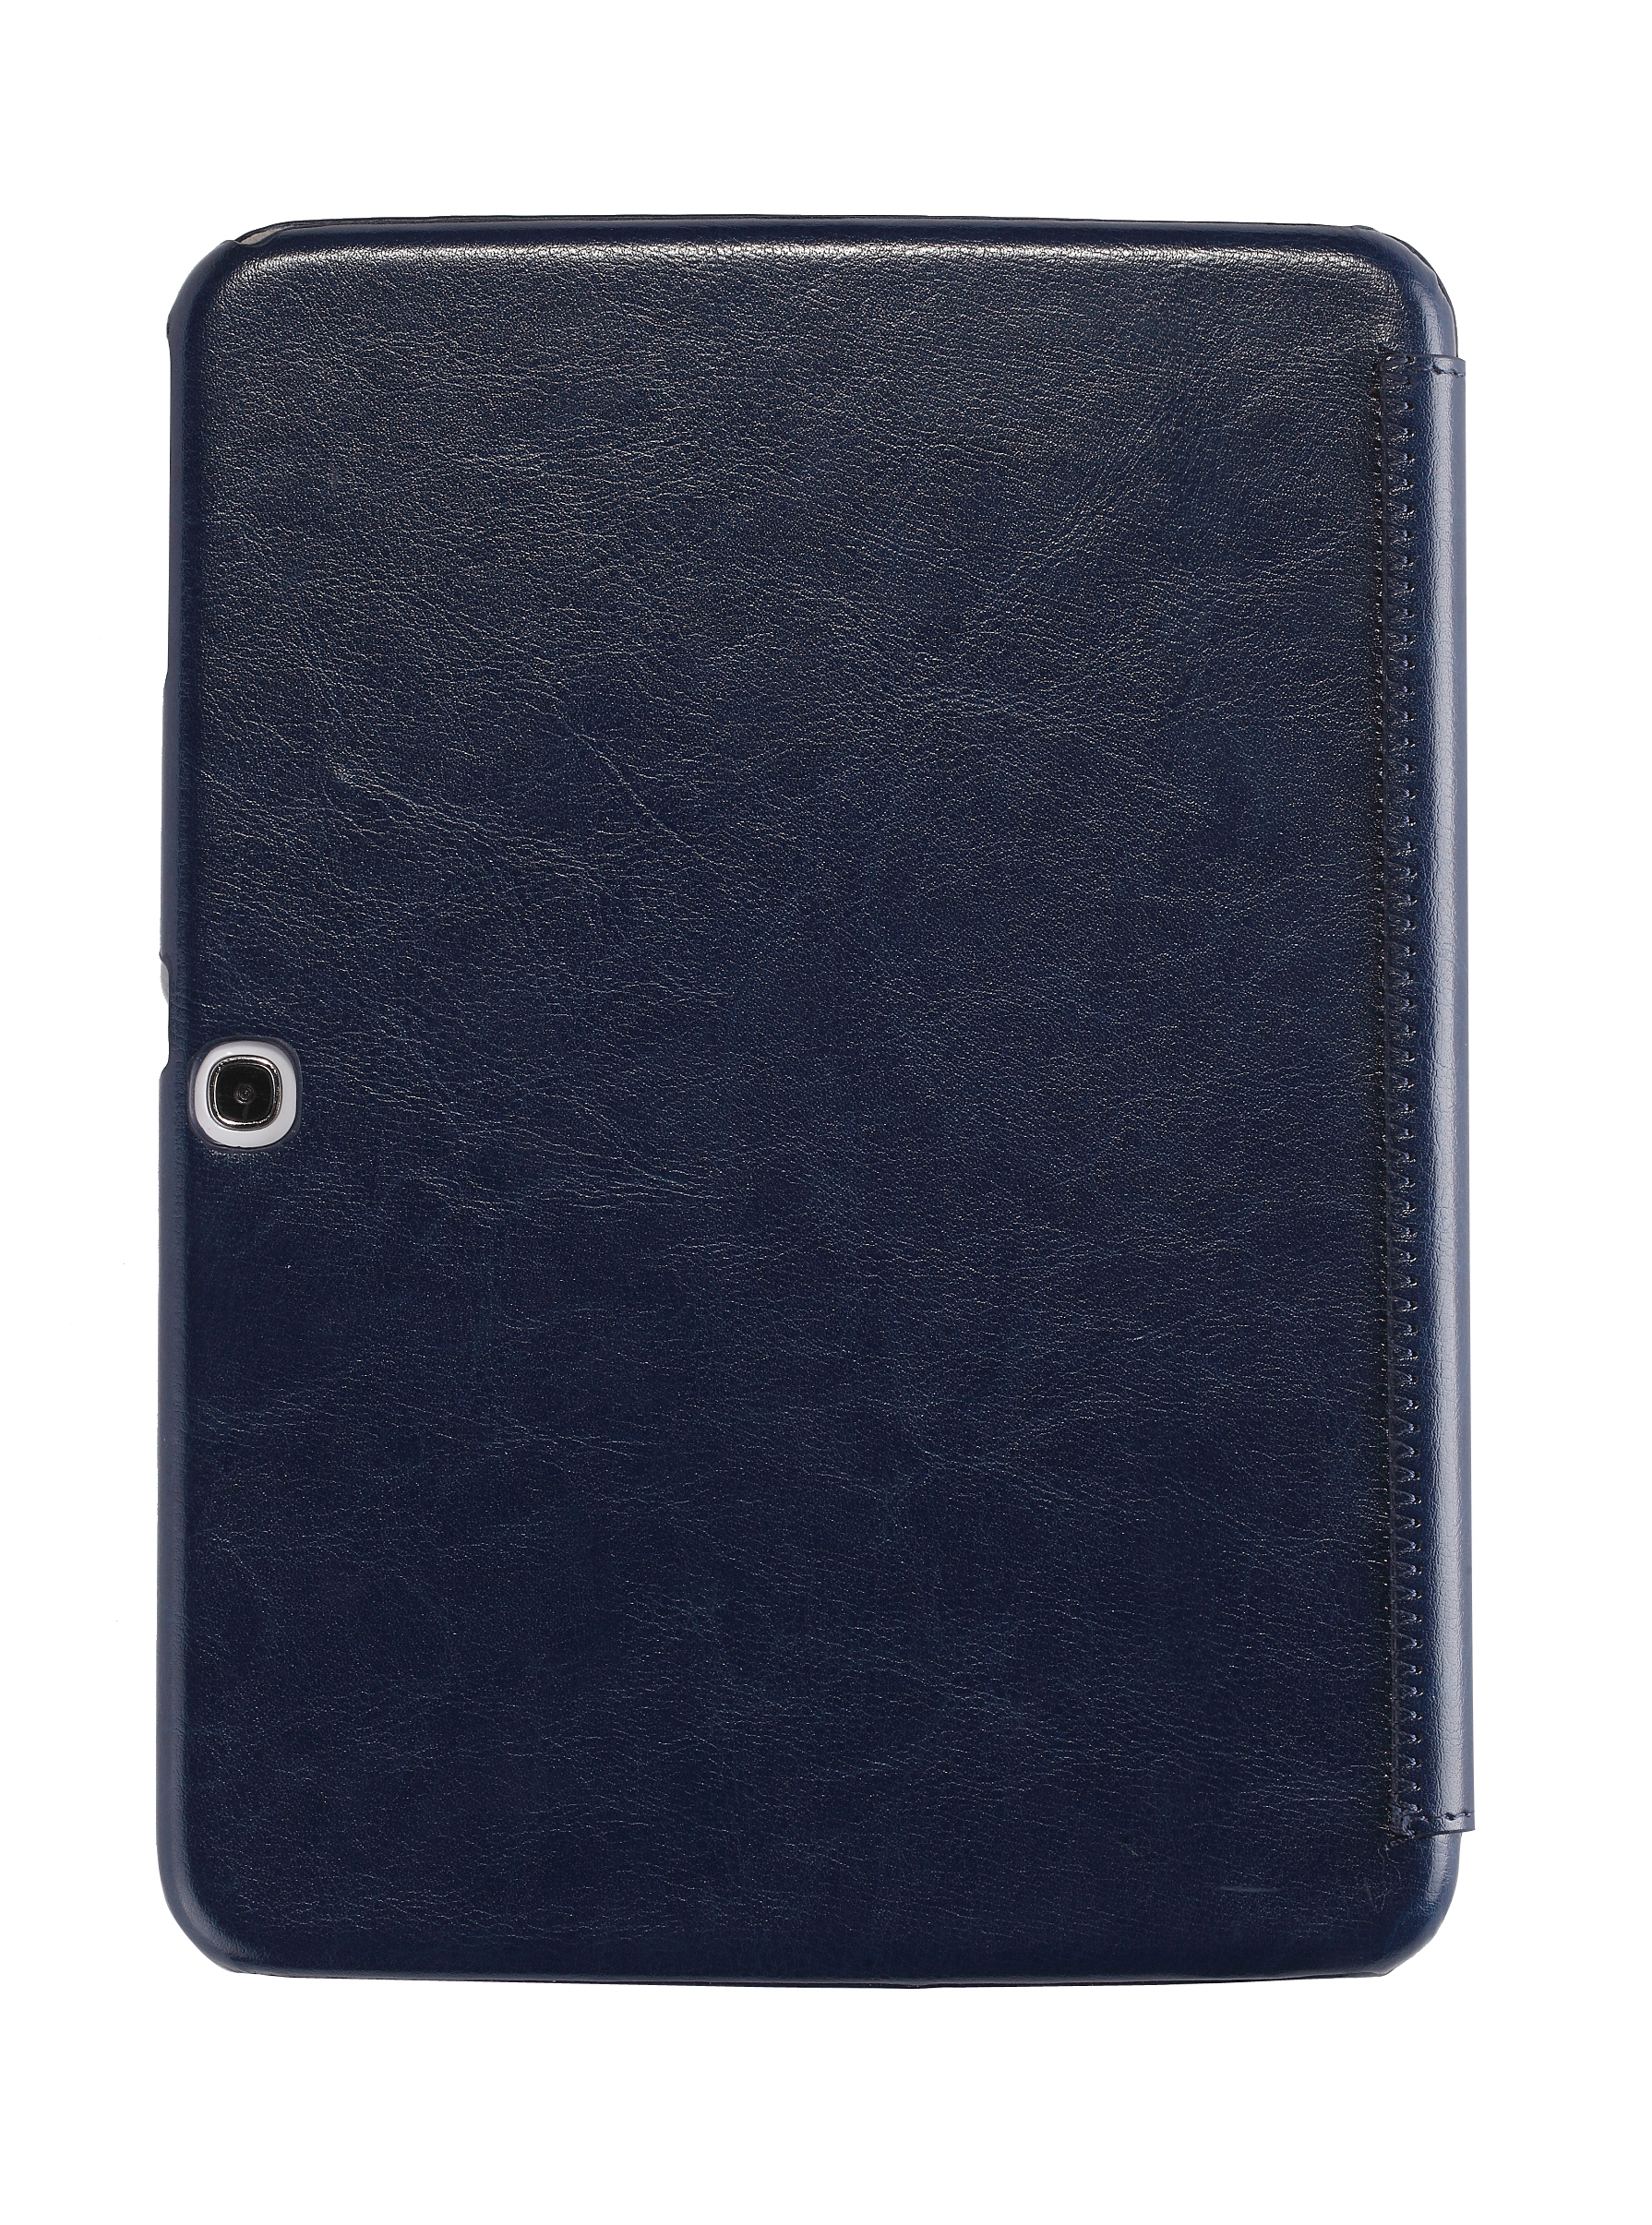 Чехол-книжка G-Case Slim Premium для Samsung Galaxy Tab 3 10.1 Black Blue